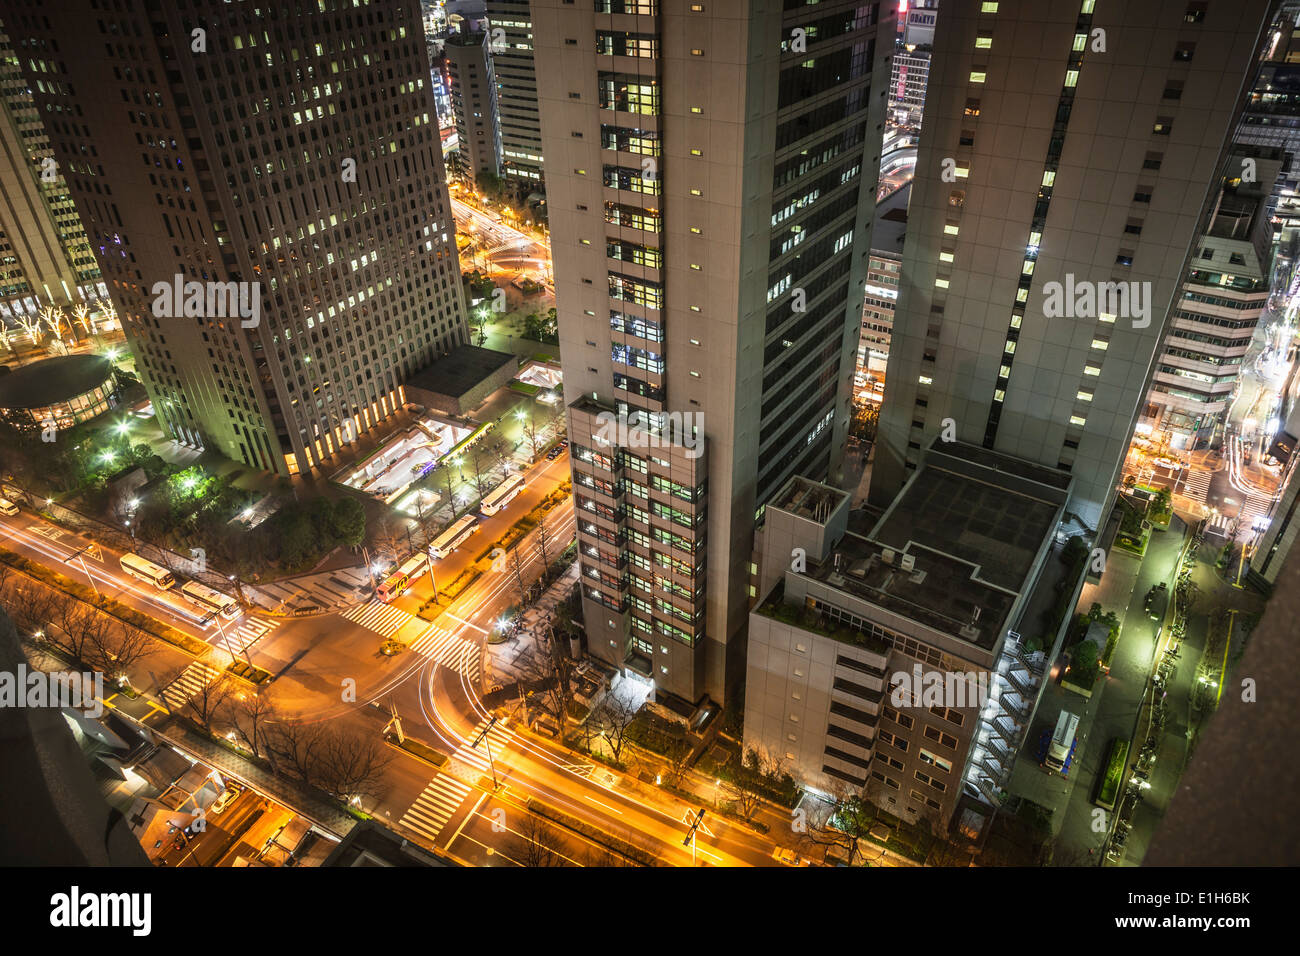 Vue des rues et du trafic nocturne, Tokyo, Japon Banque D'Images